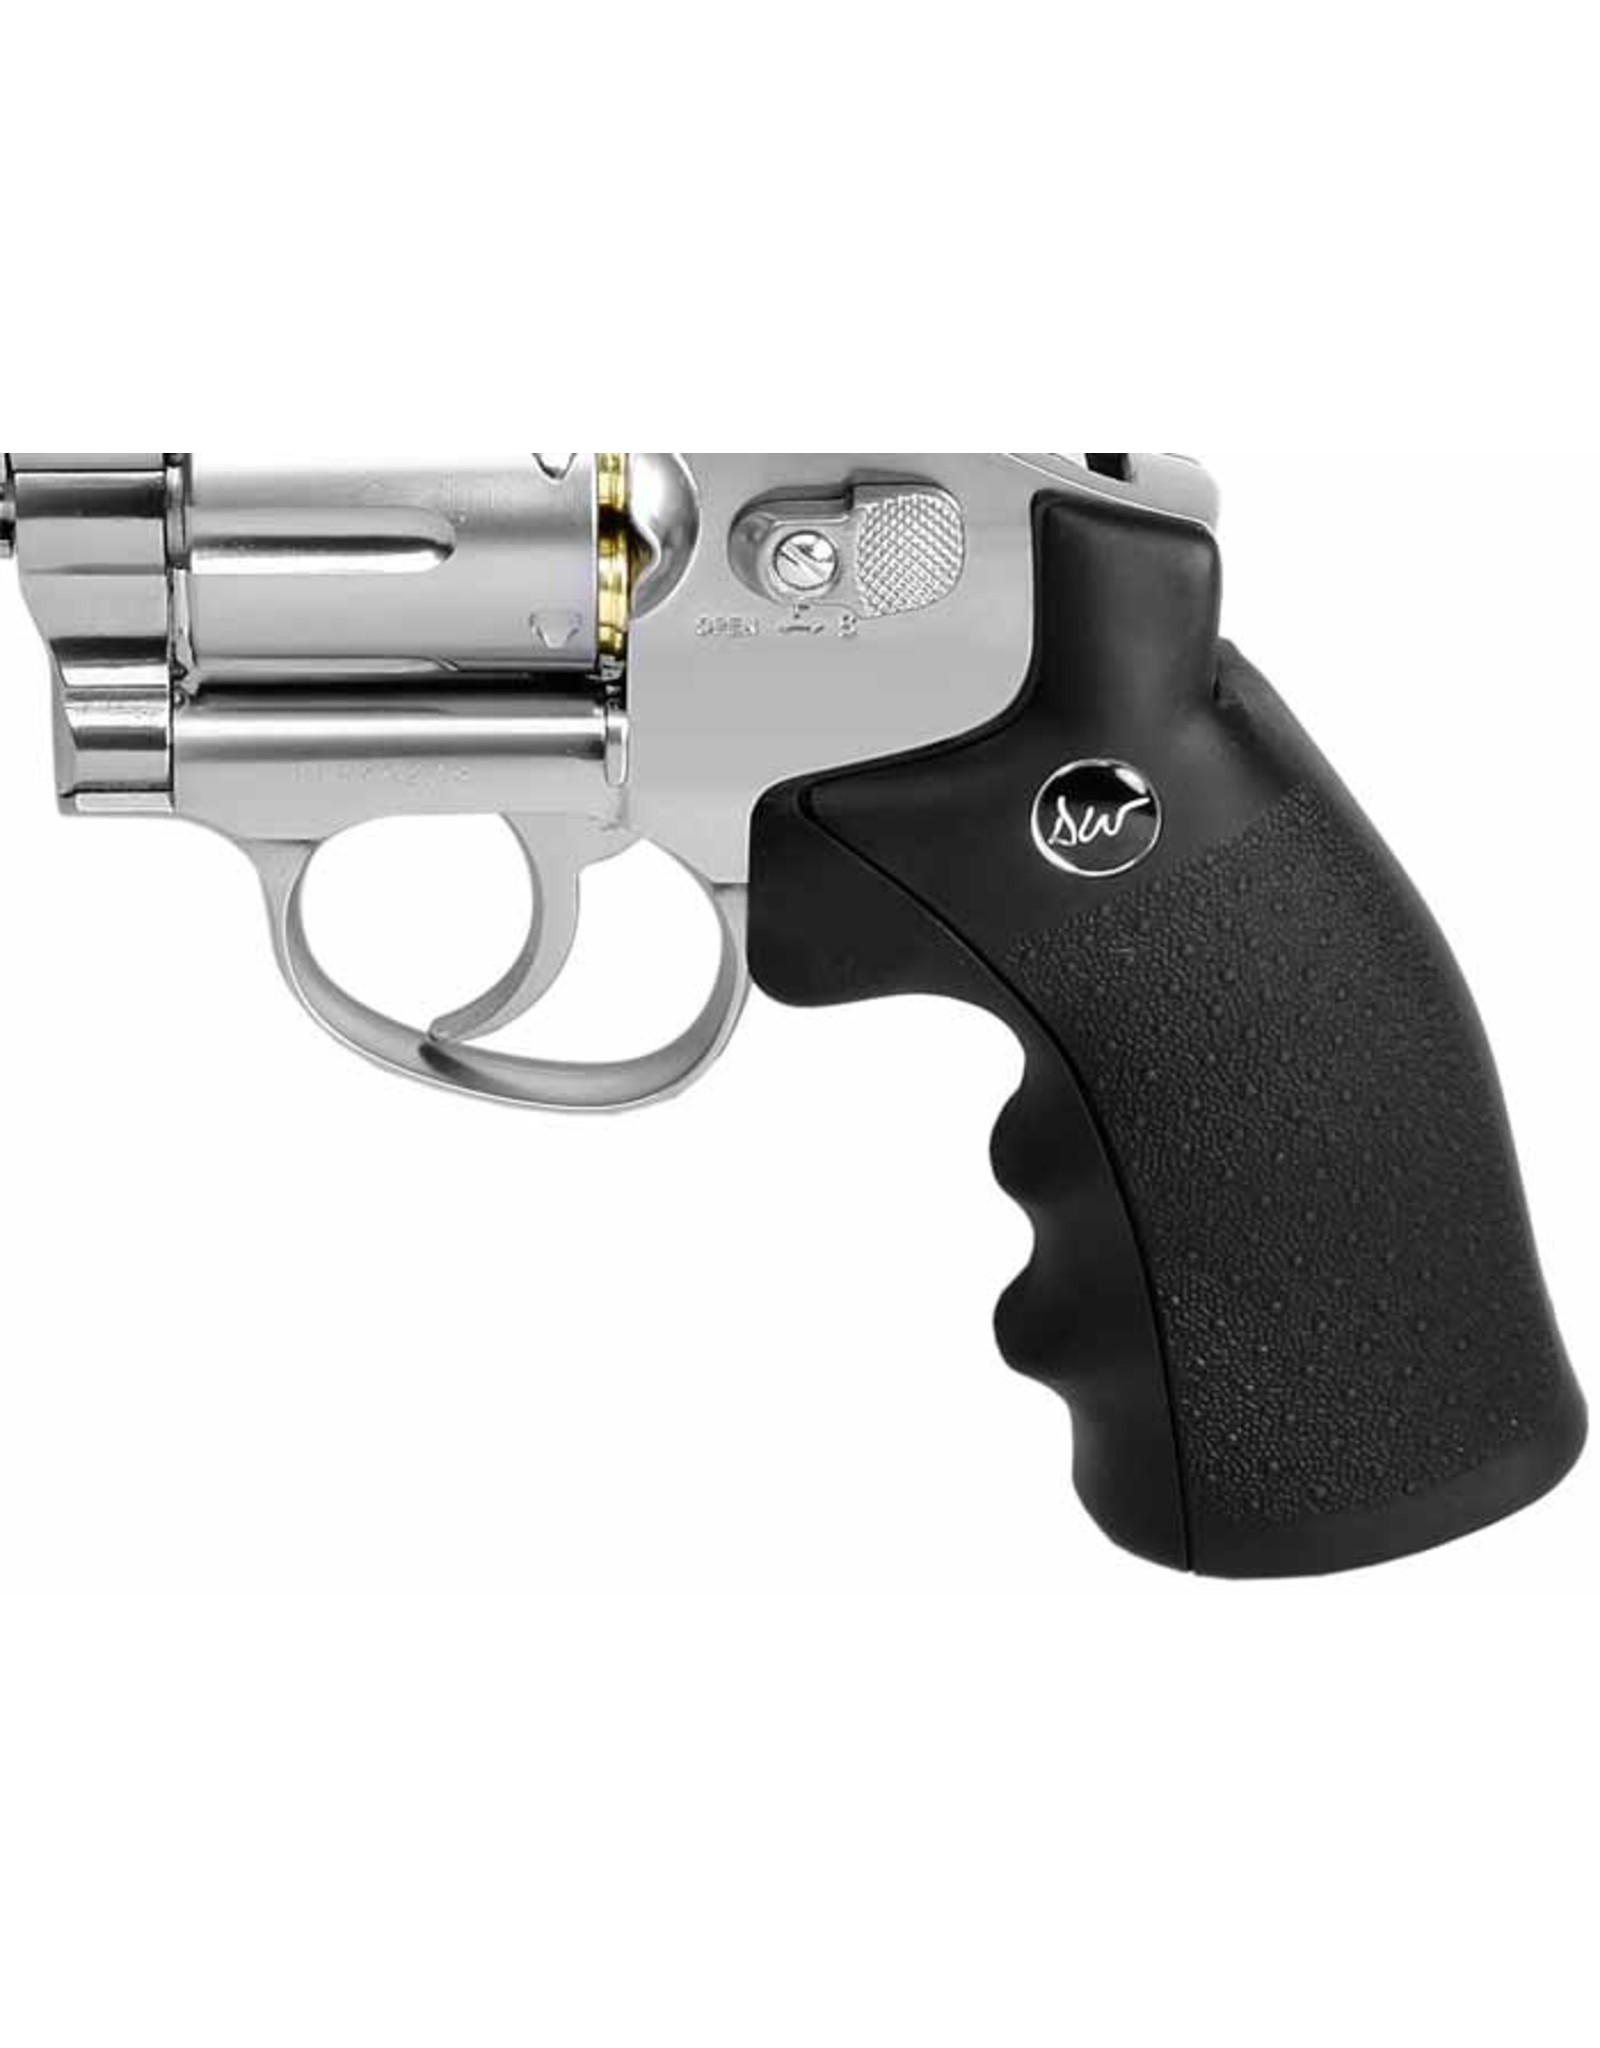 Dan Wesson Dan Wesson 6" BB Revolver 425 fps